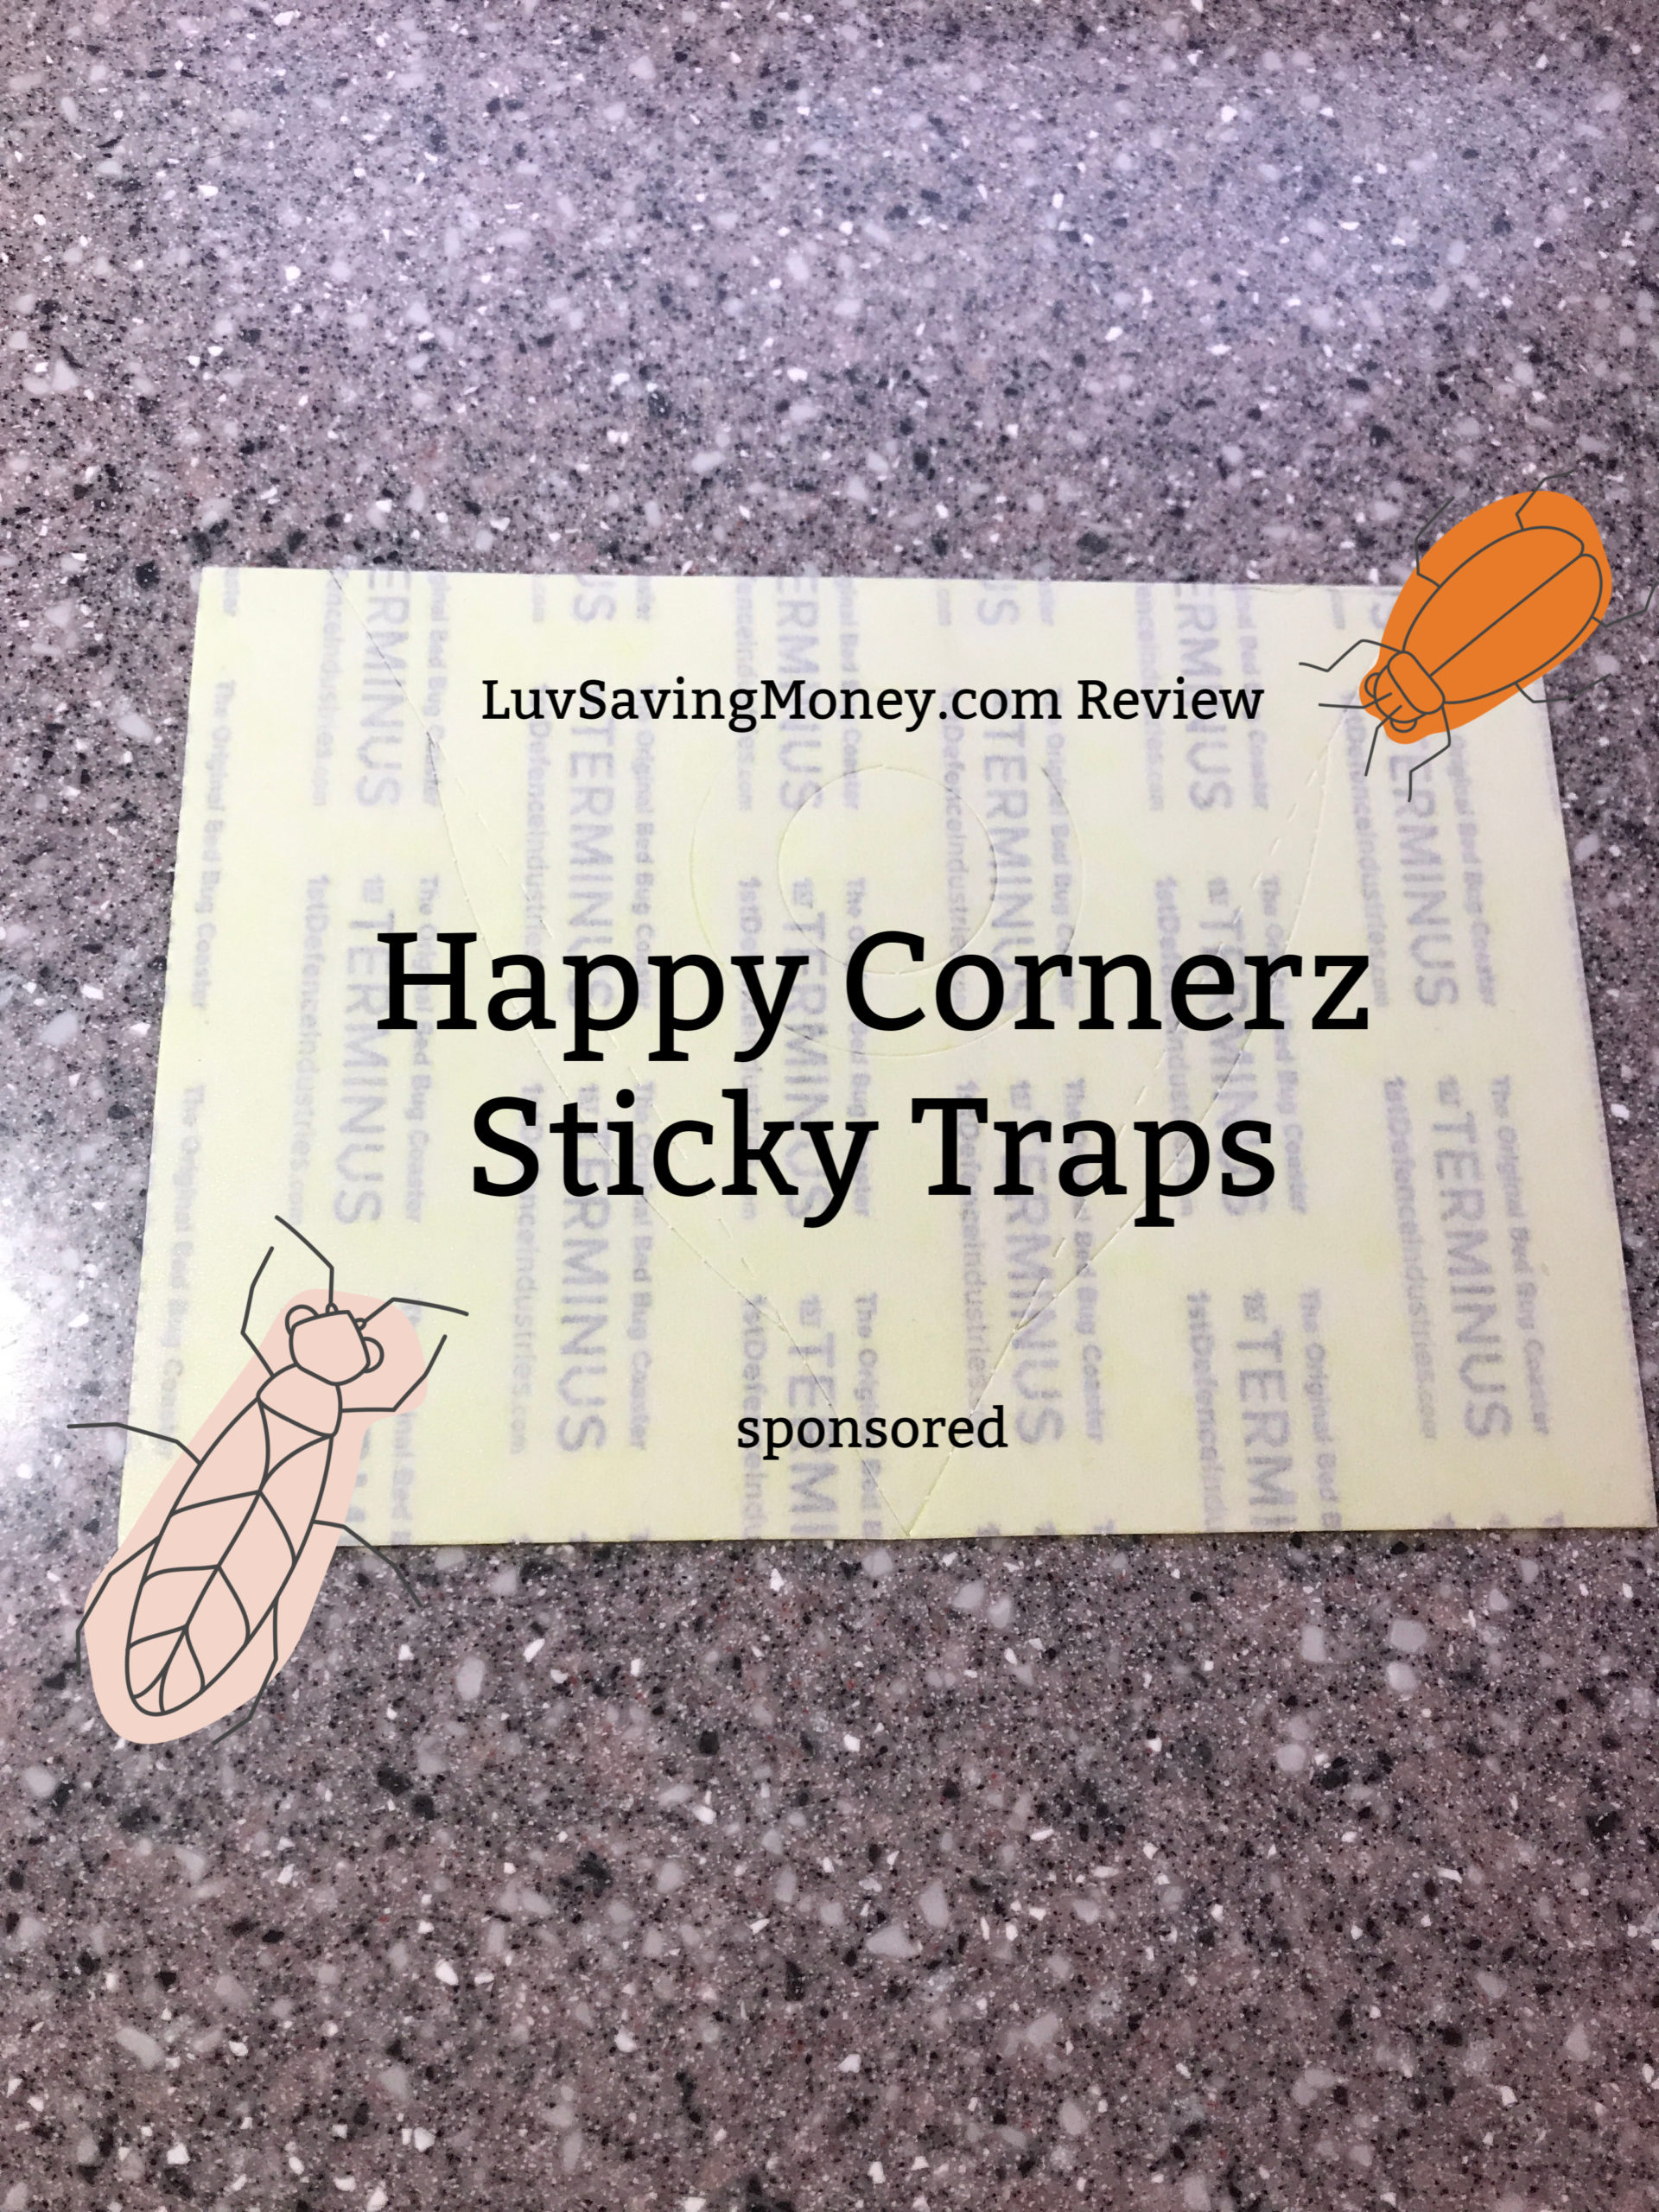 Happy Cornerz Sticky Trap Review and Set Up